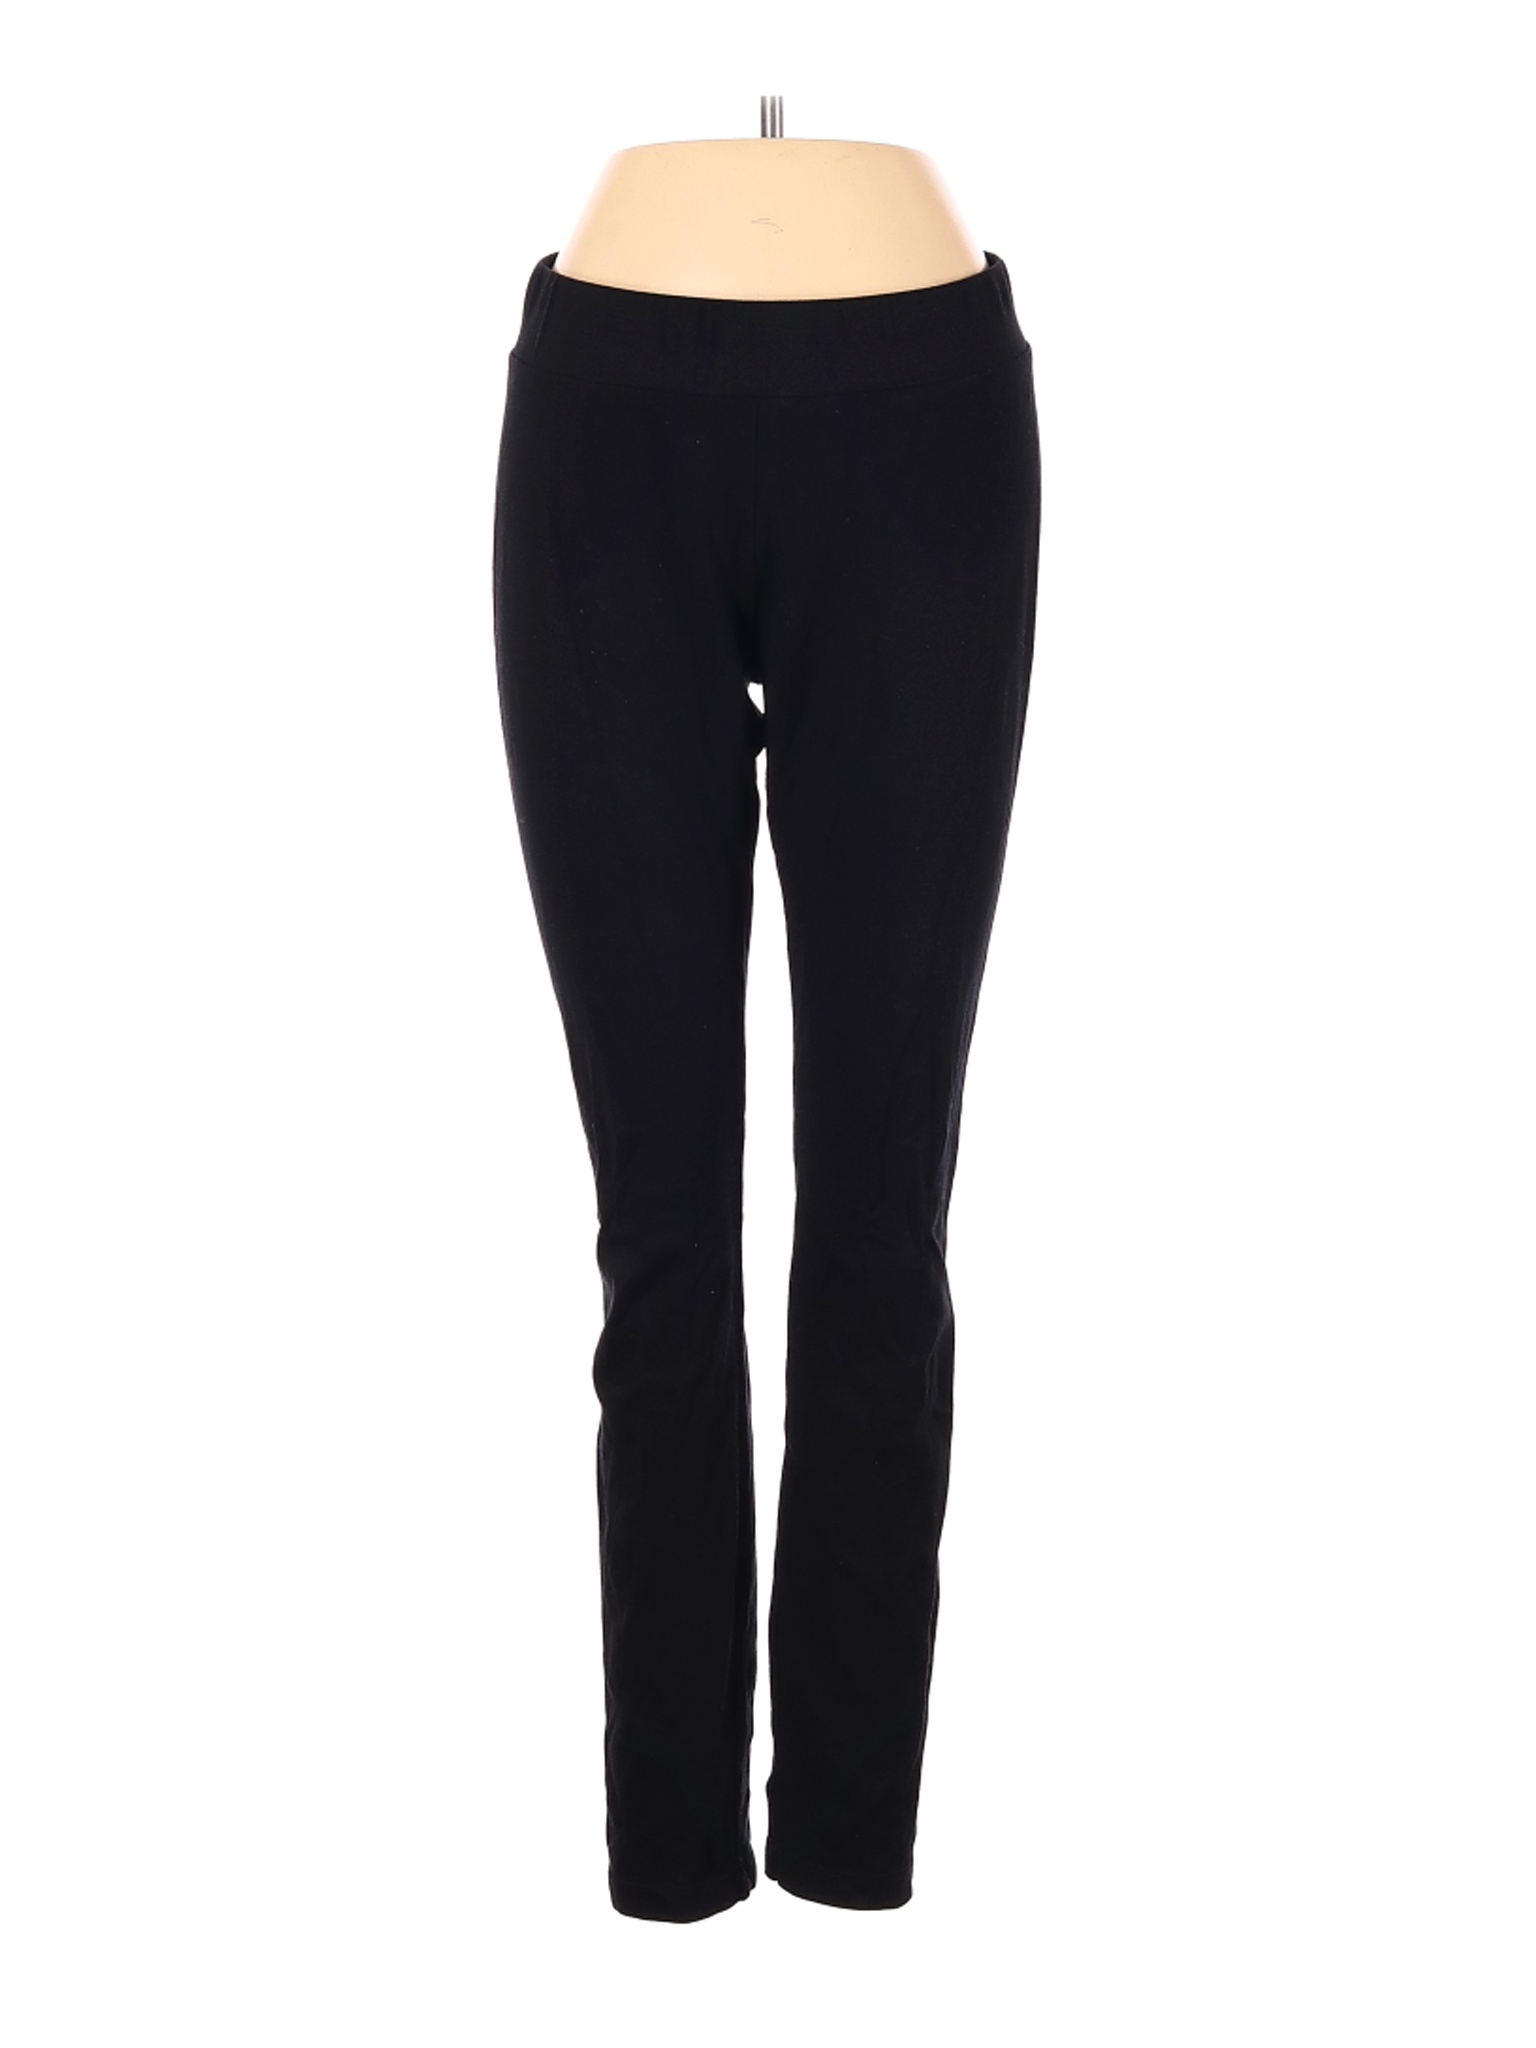 Solid Knee Length Short Spandex Yoga Leggings 3 Pack, Black, Brown, Navy,  Fit Size 0-12 / XS-L 